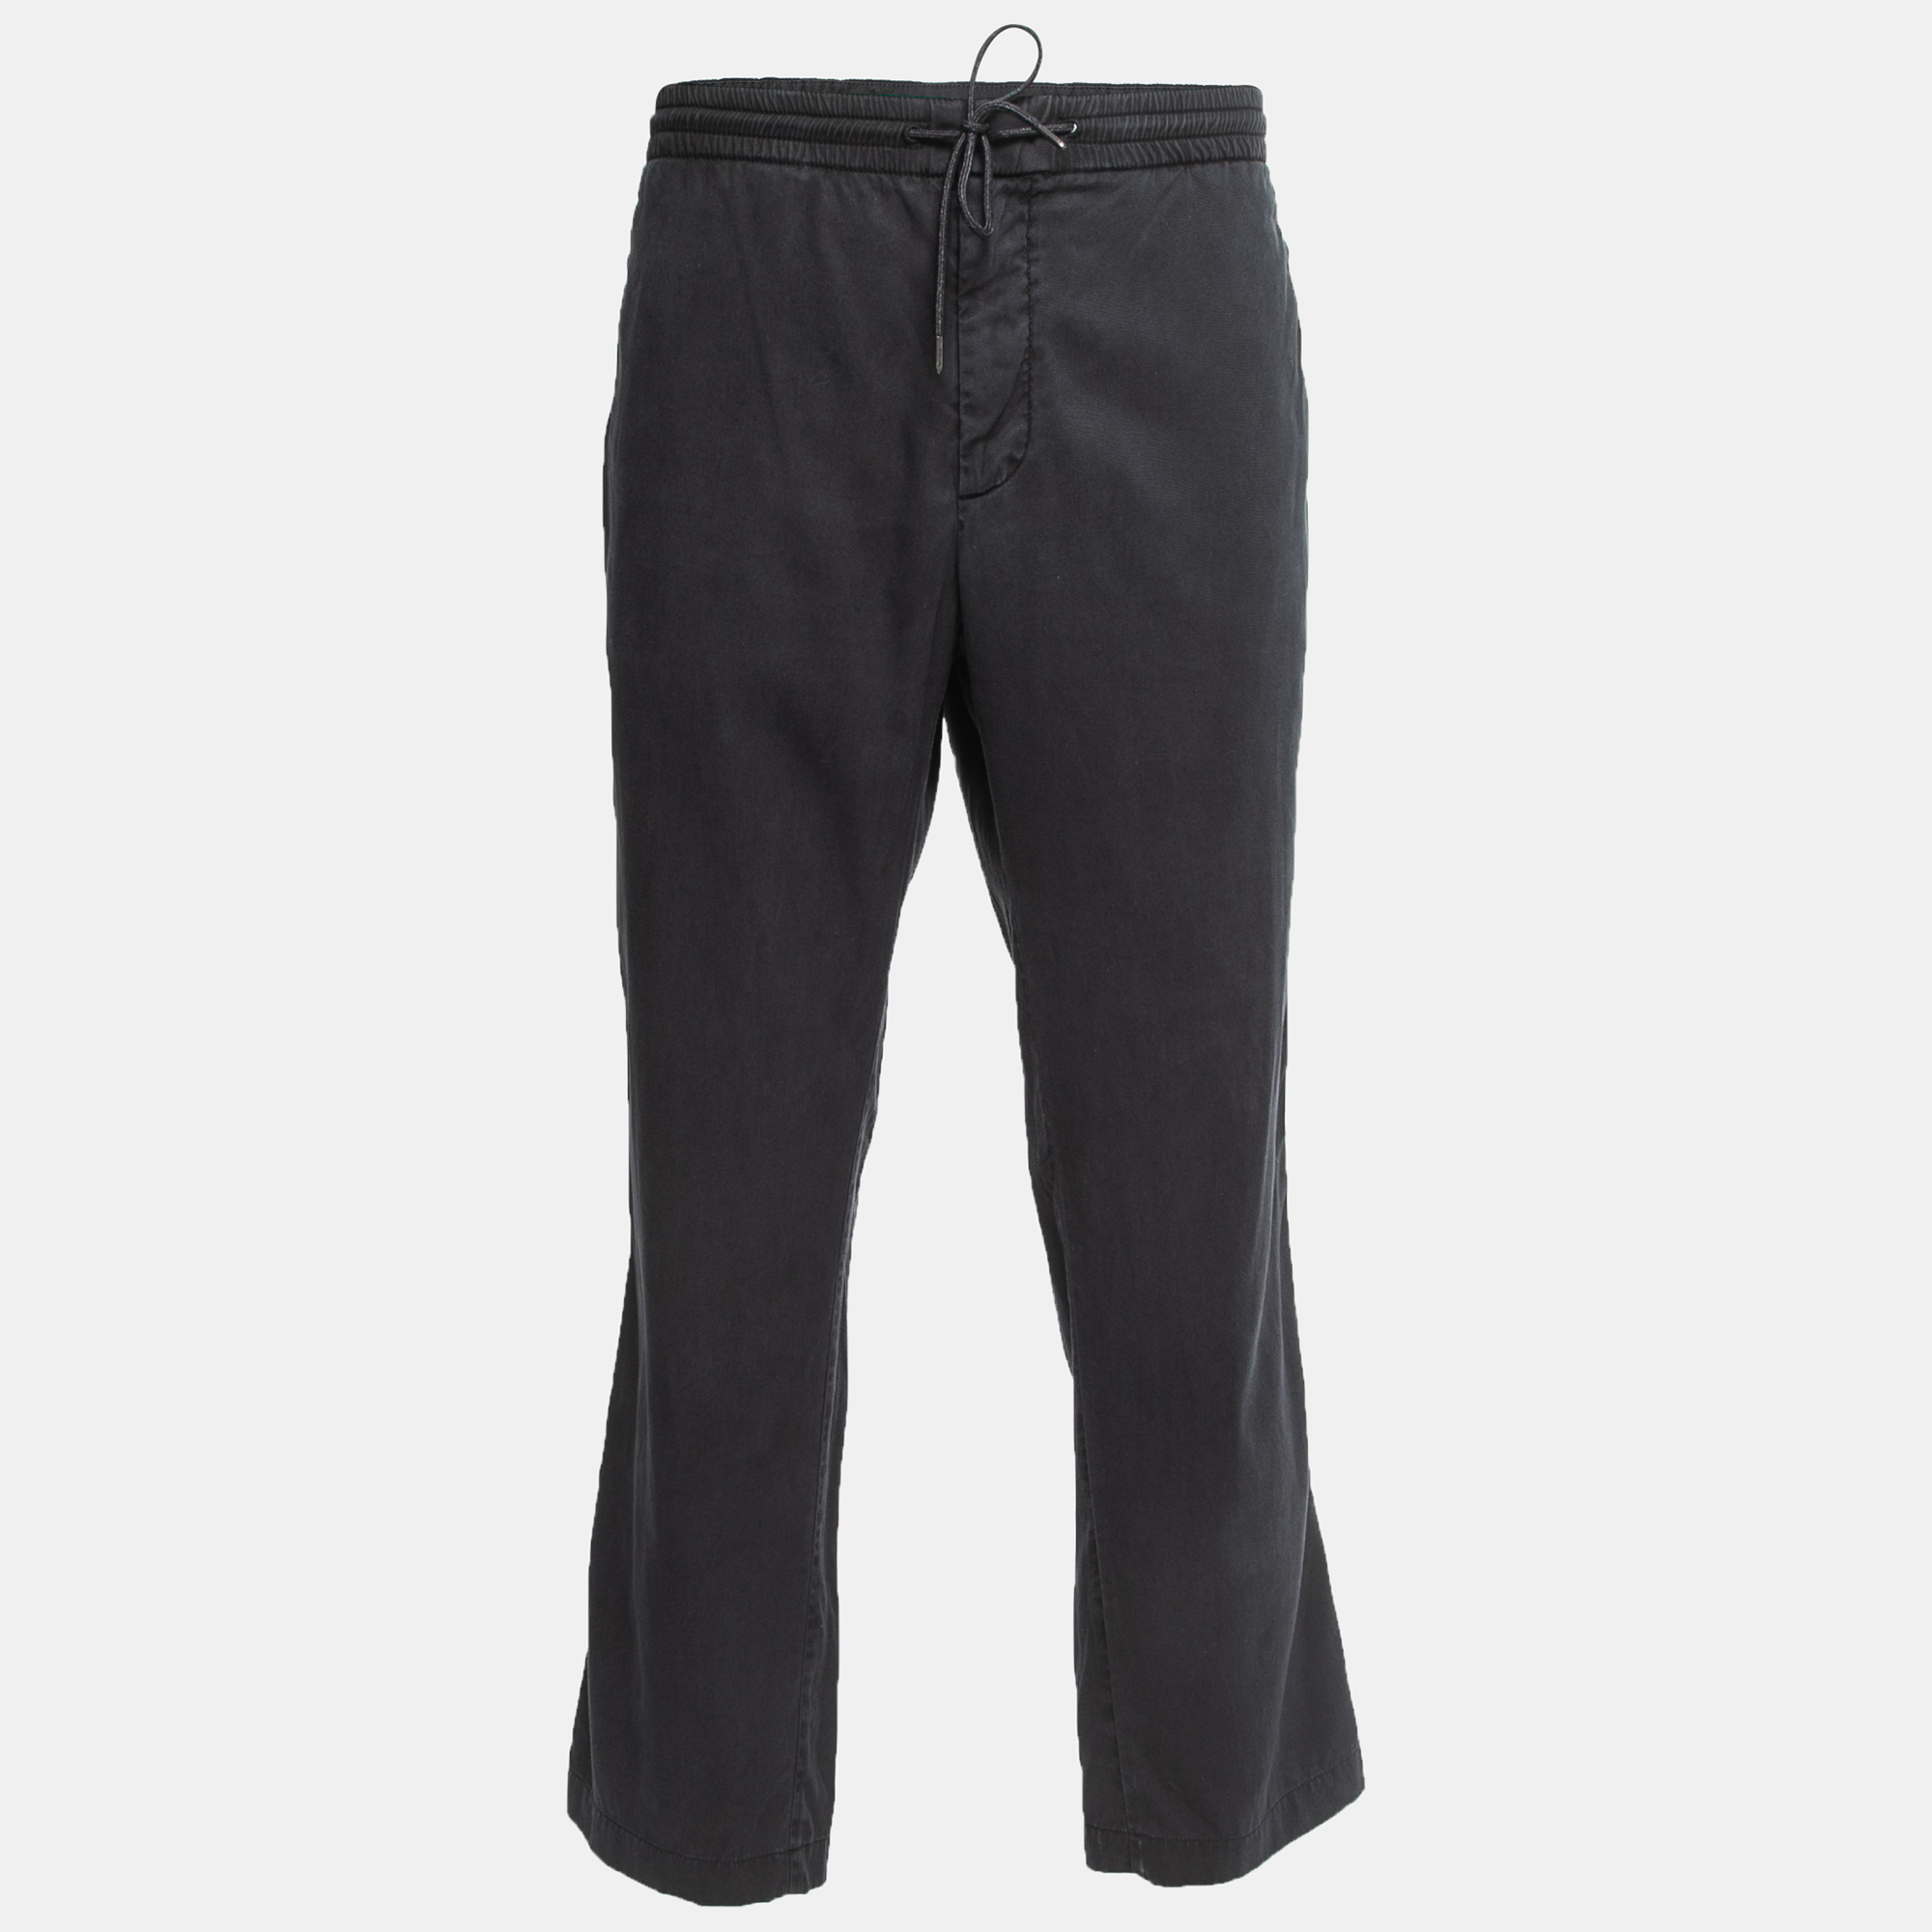 Z zegna black cotton blend drawstring waist trousers xxl/waist 37"